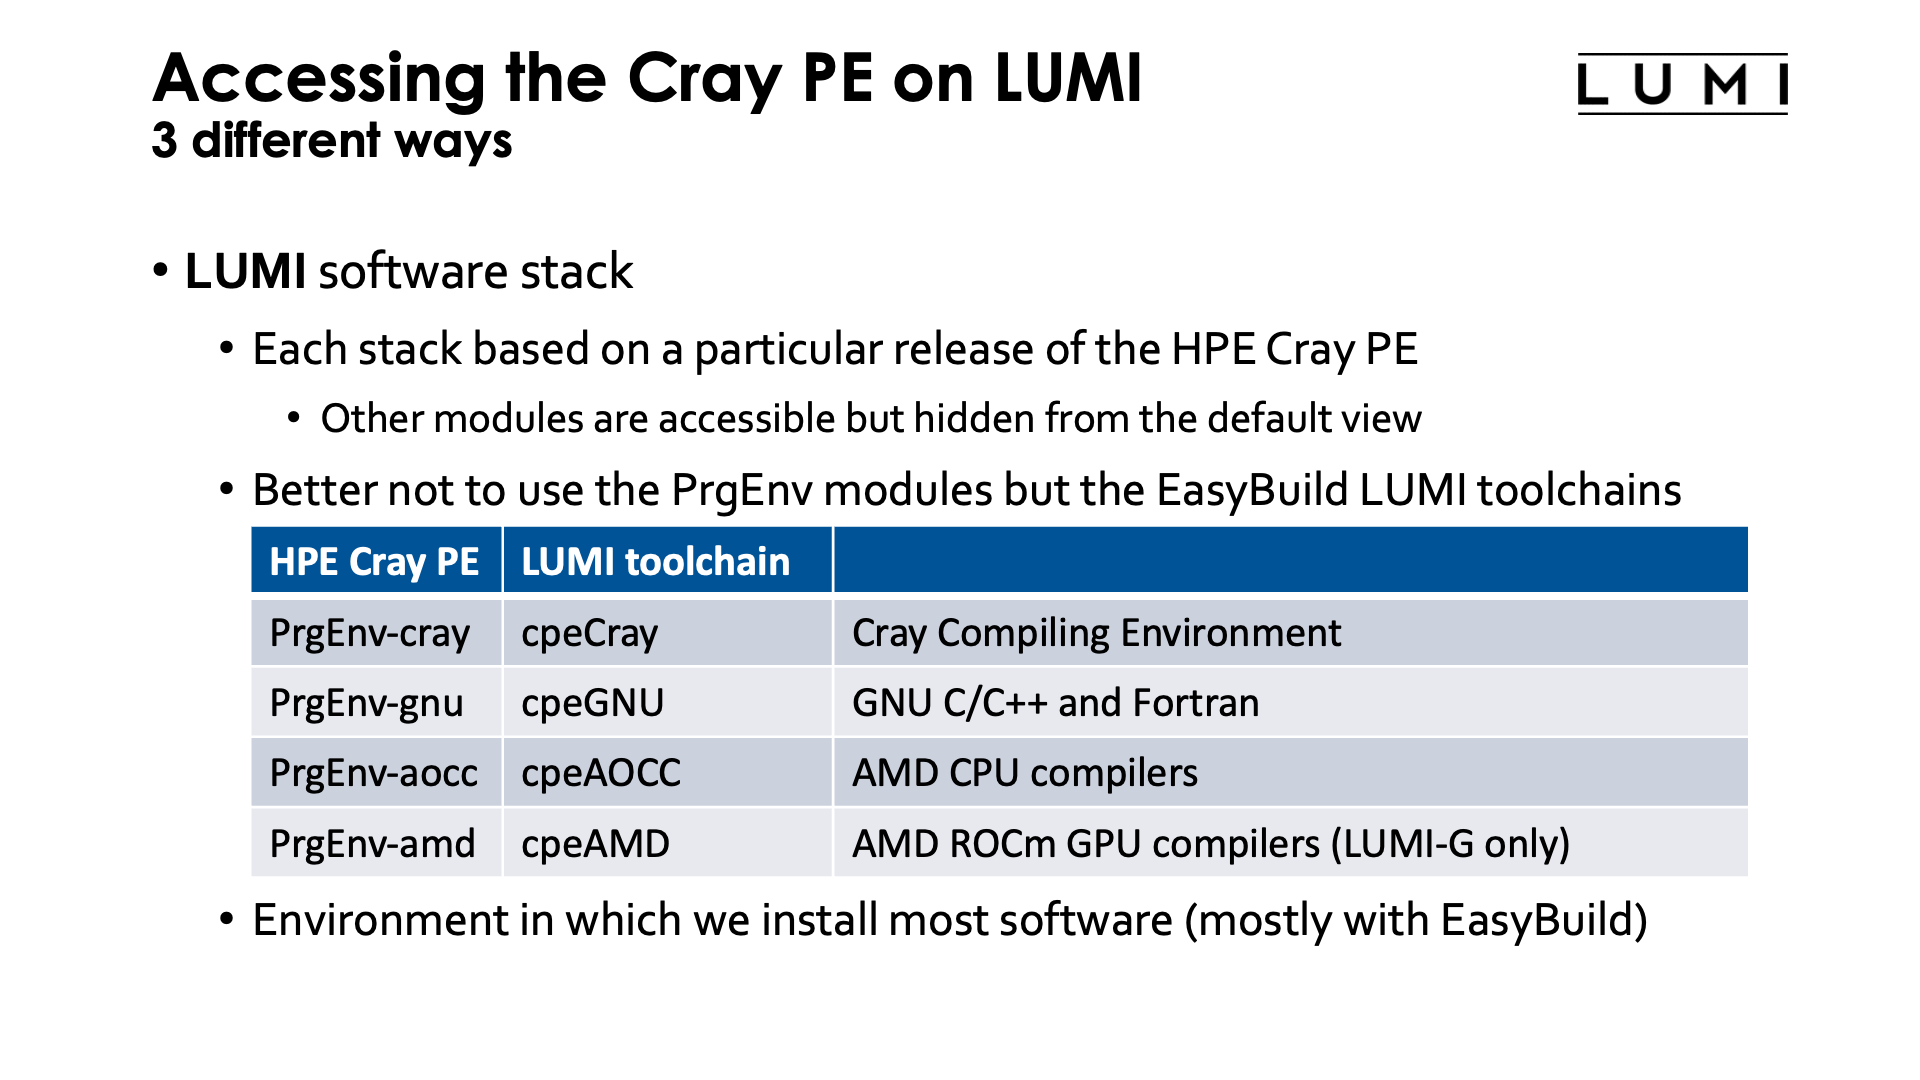 Accessing the Cray PE on LUMI slide 2